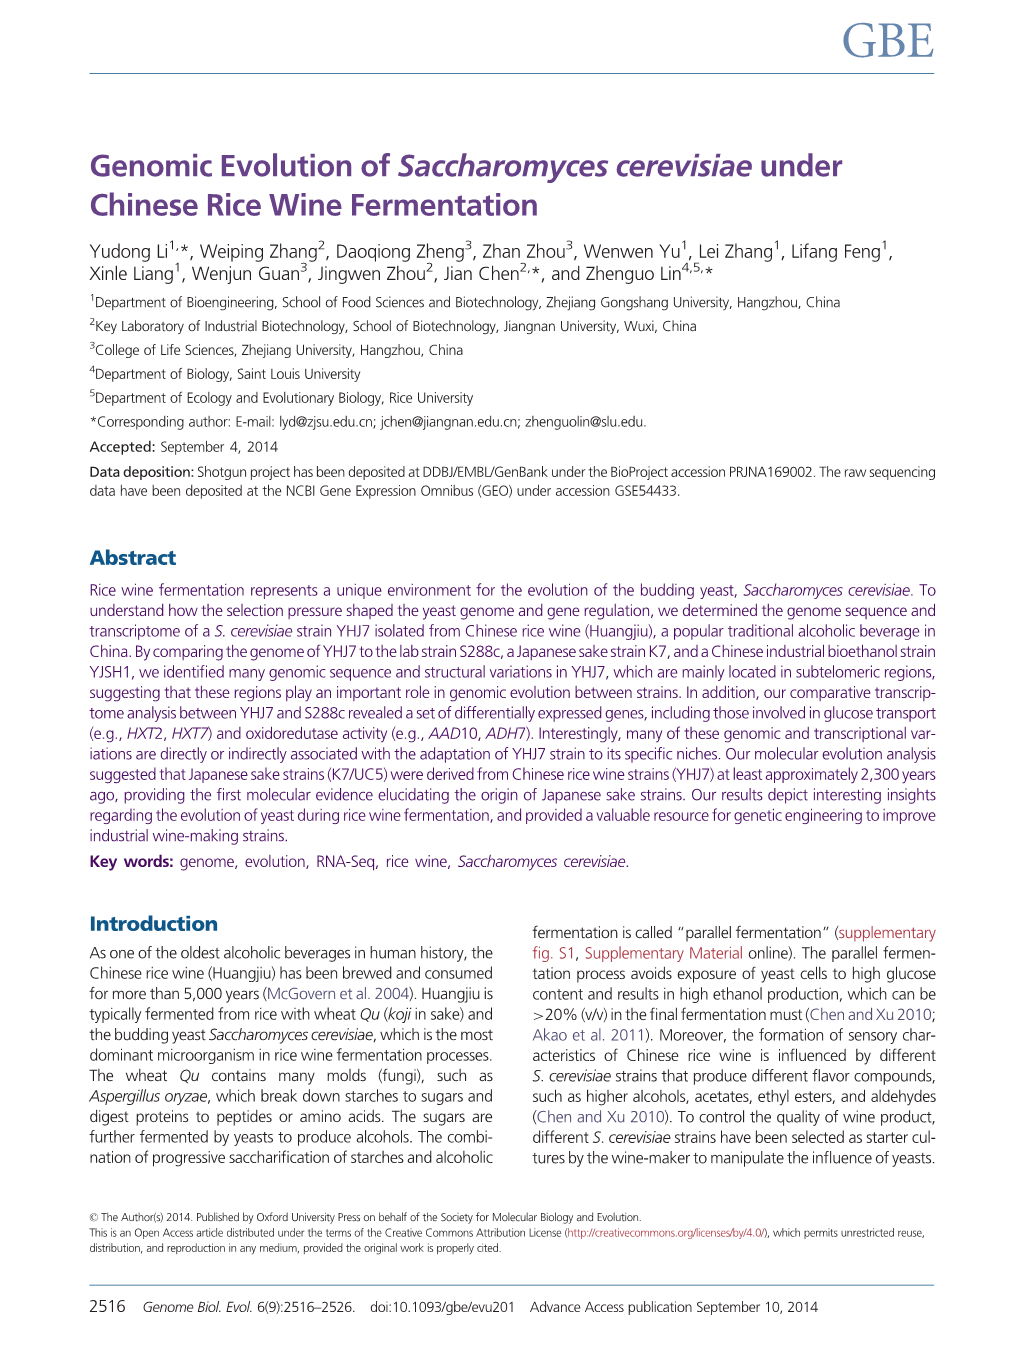 Genomic Evolution of Saccharomyces Cerevisiae Under Chinese Rice Wine Fermentation